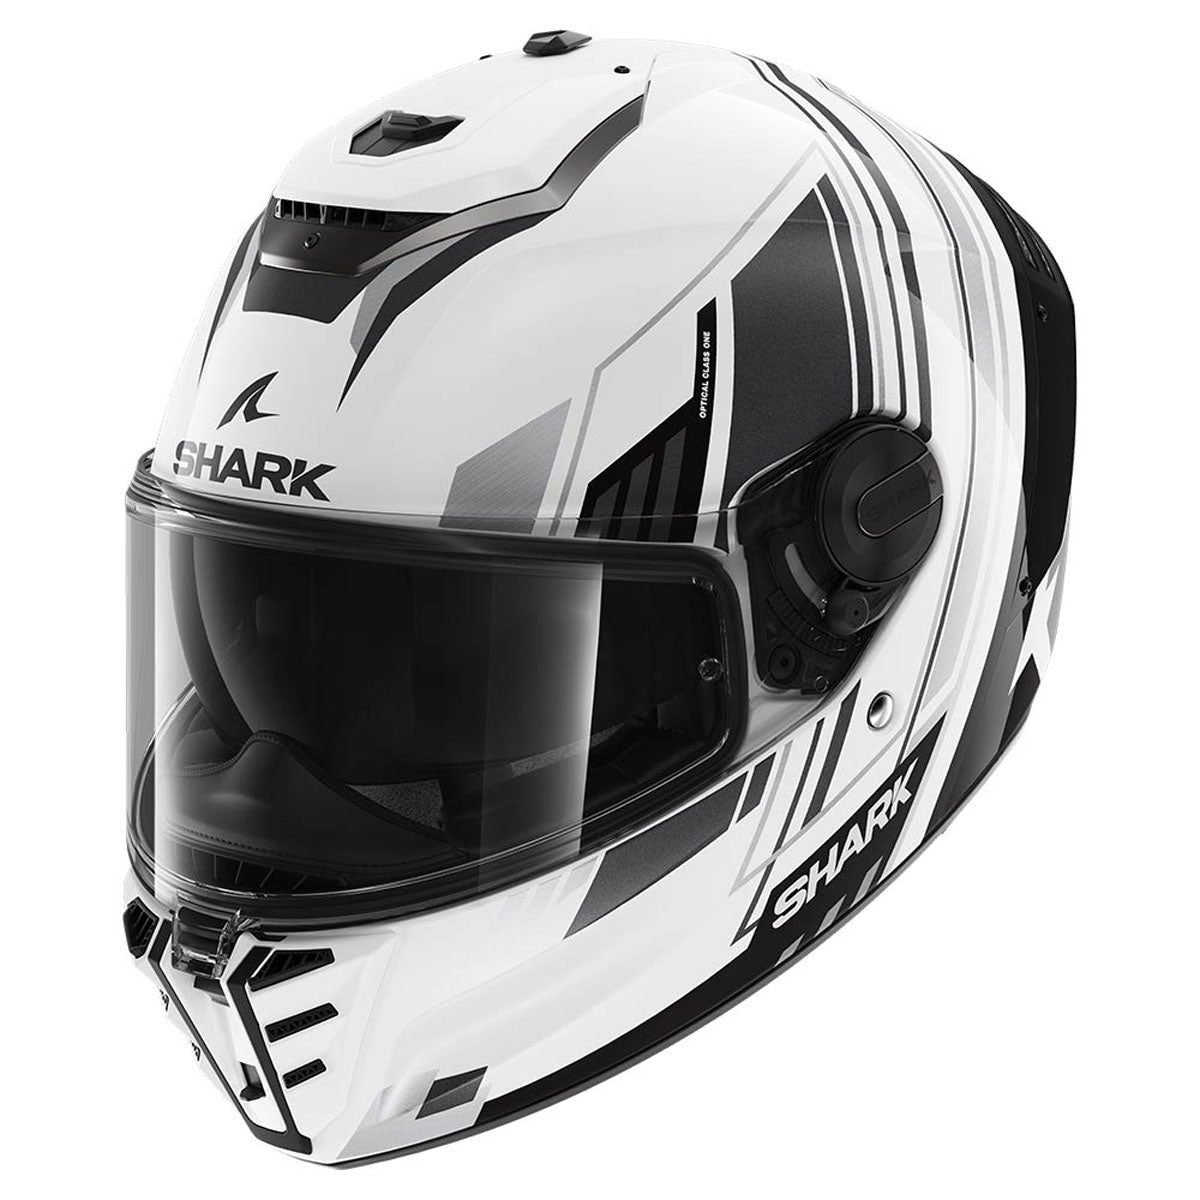 Shark Spartan RS Byrhon Helmet - ExtremeSupply.com